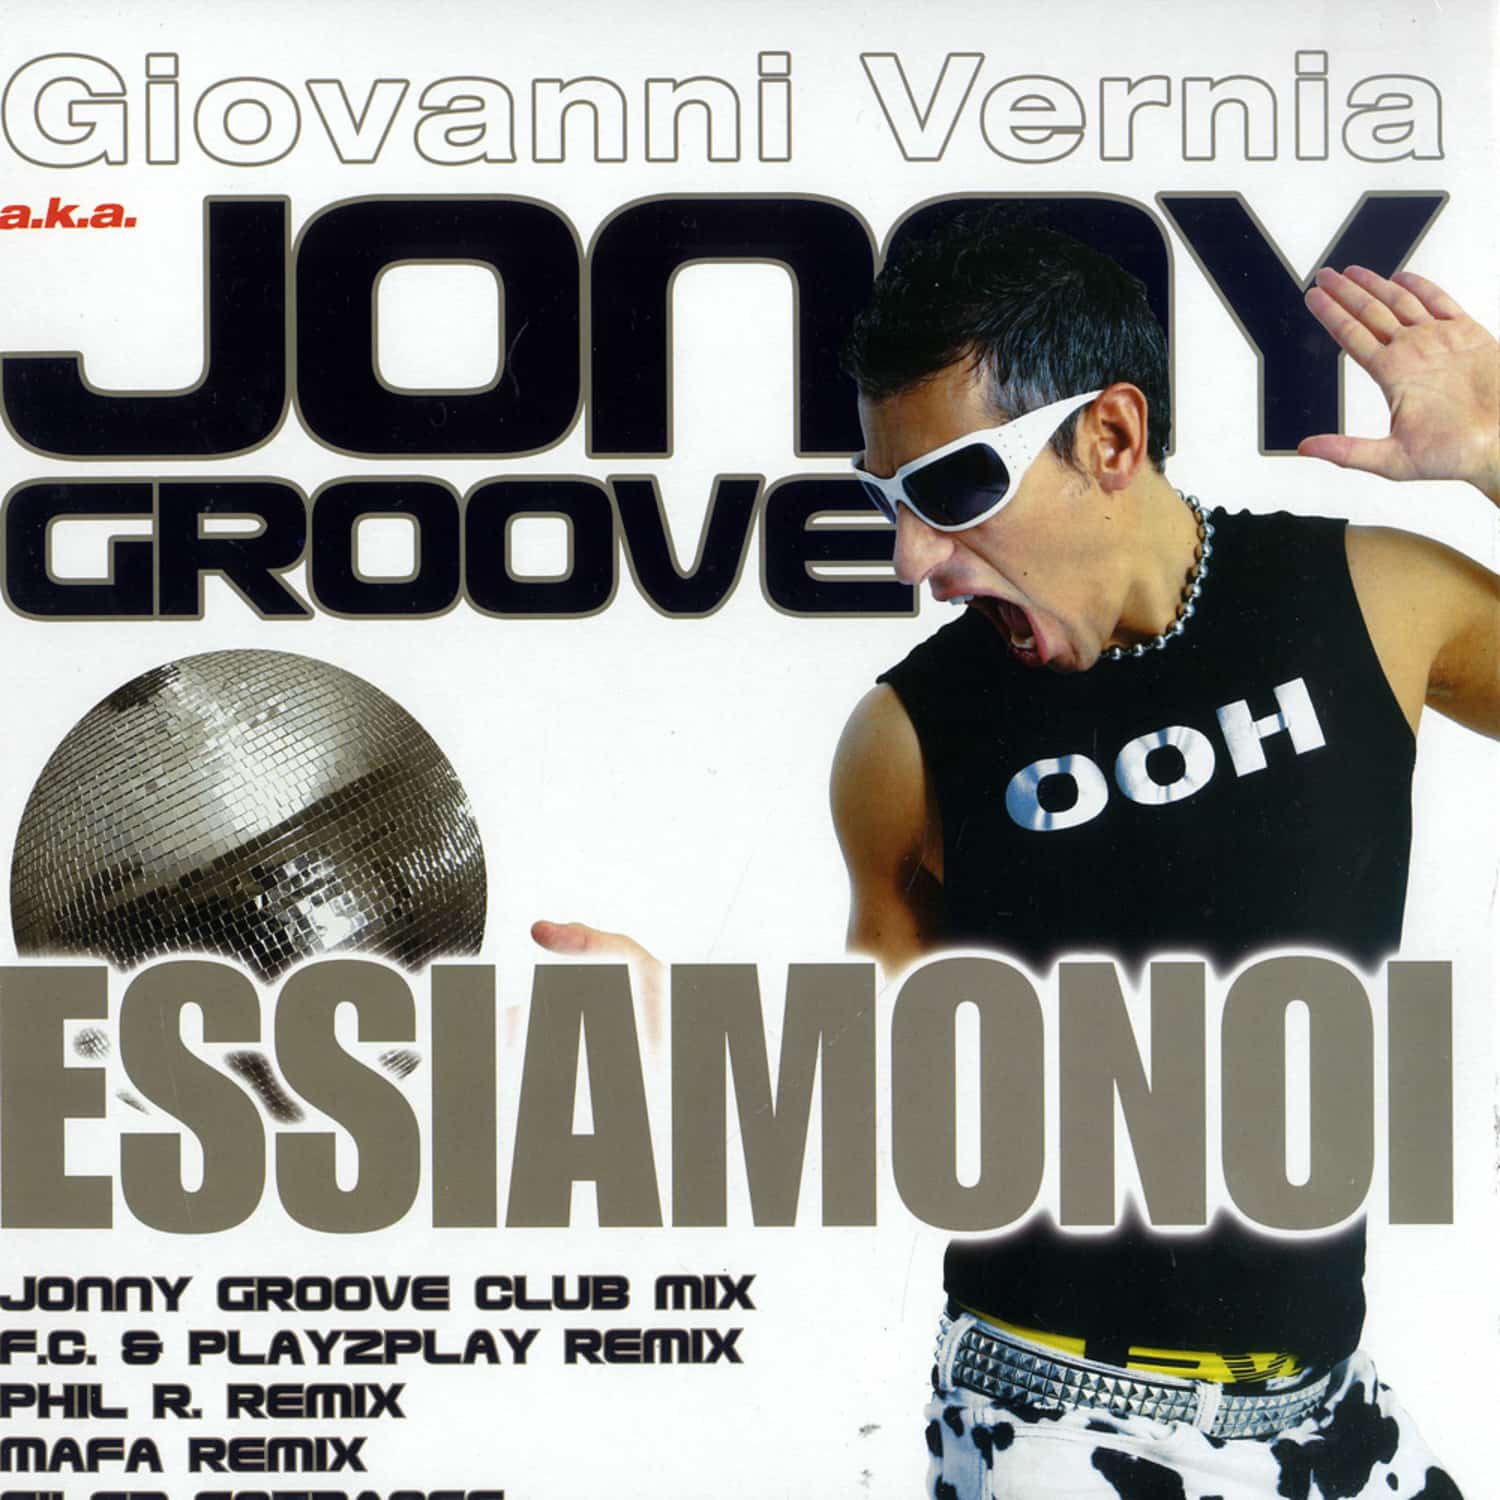 Giovanni Vernia aka Jonny Groove - ESSIAMONOI